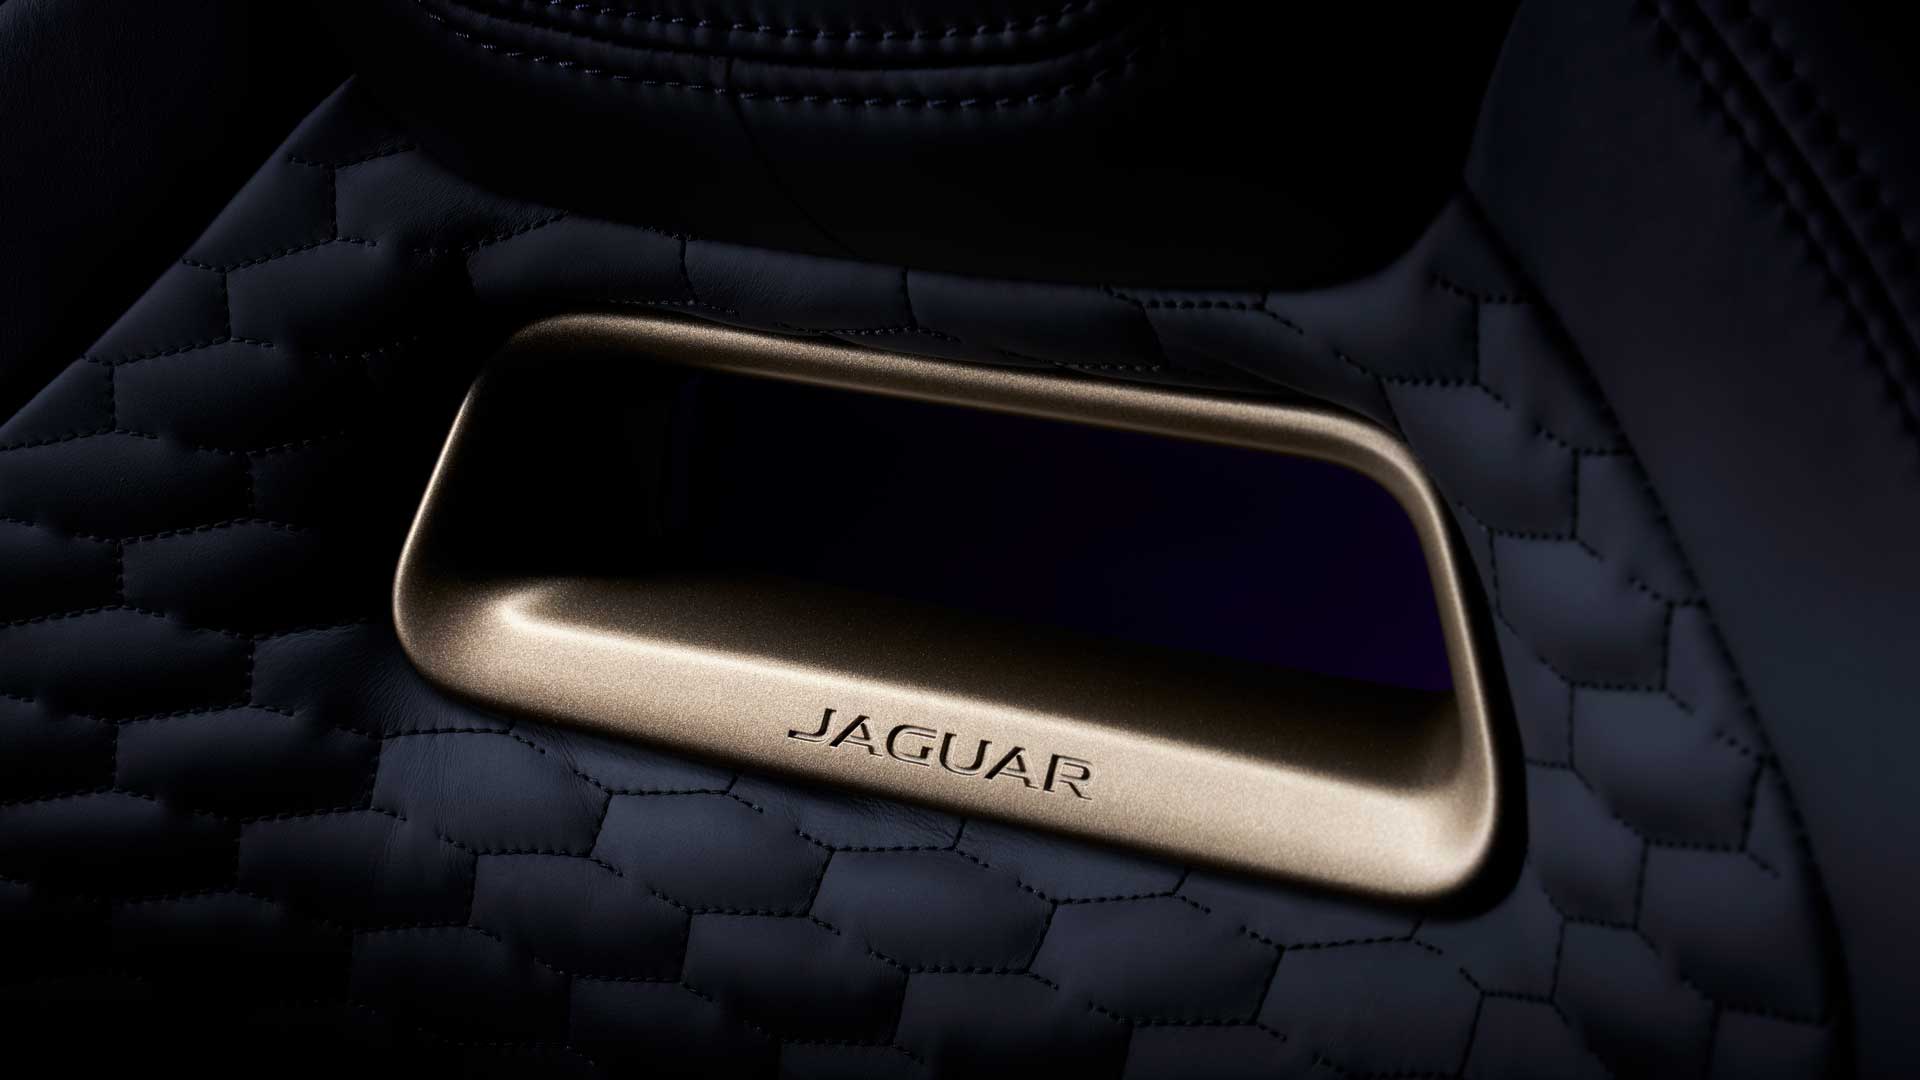 Dettagli-SUV-Jaguar-limited-edition-Robb-Report-Italia